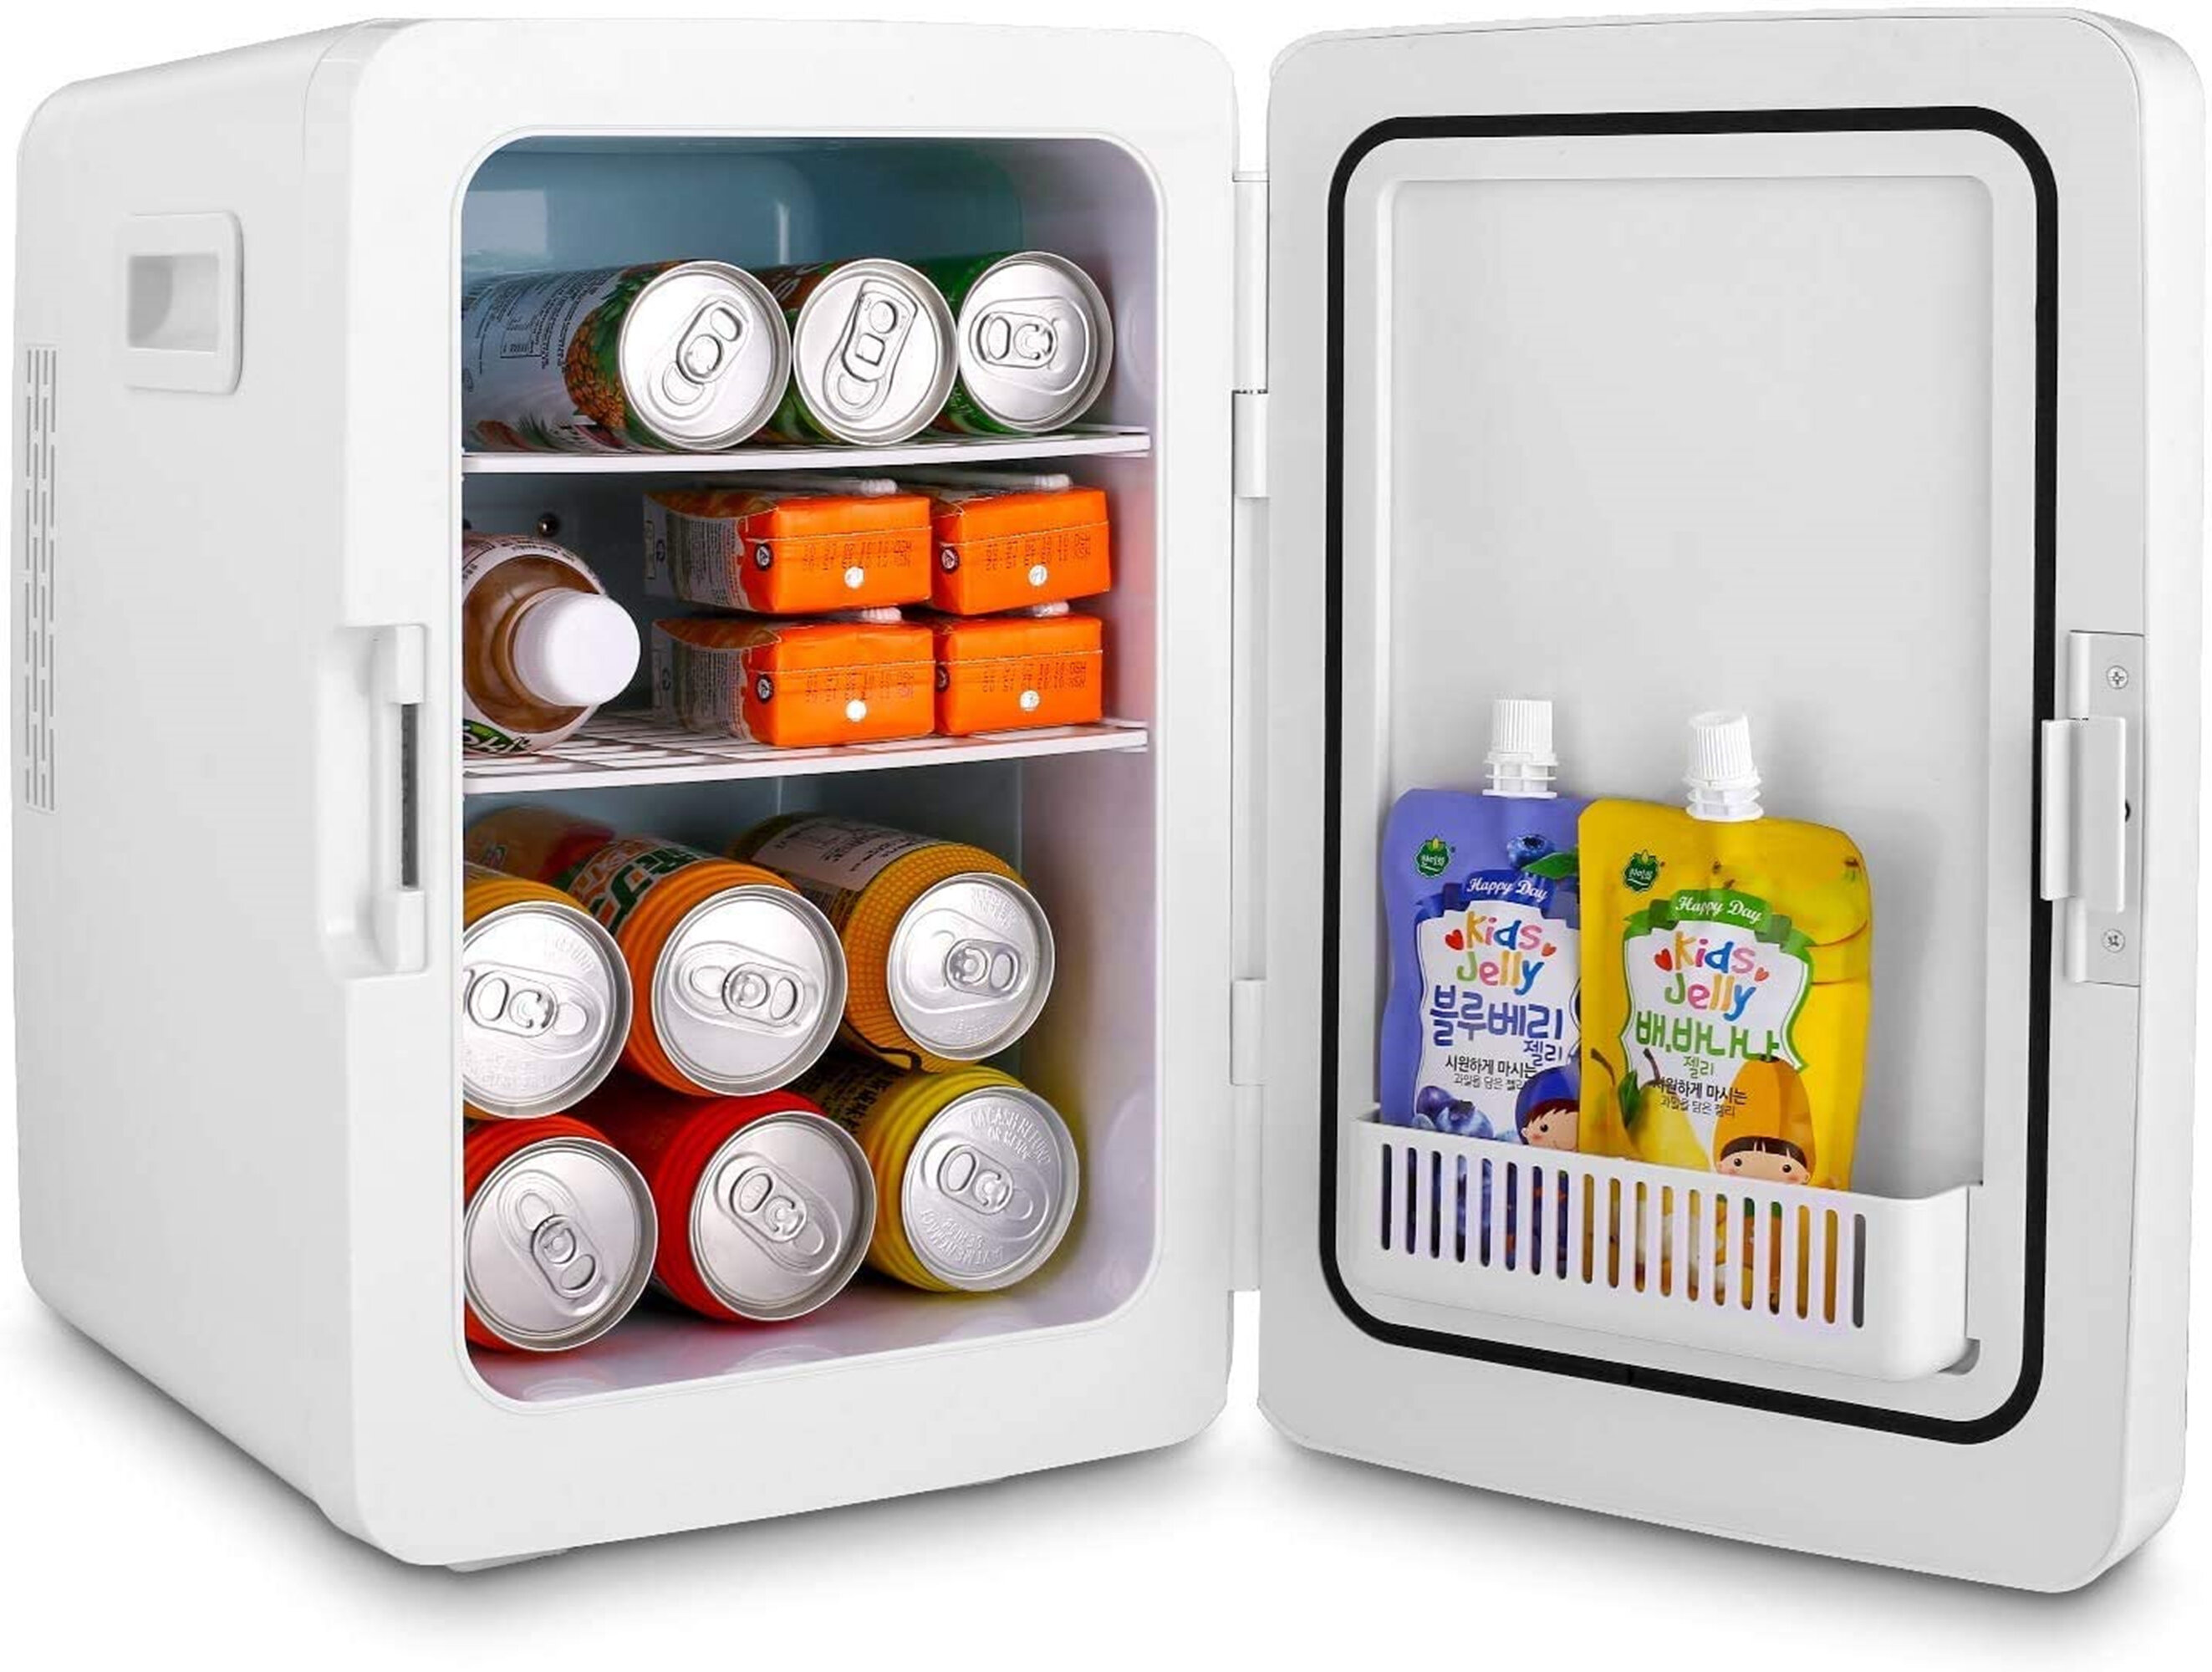 Portable Small Refrigerator Hot & Cold Box Mini Fridge Cooler Freezer Warmer New